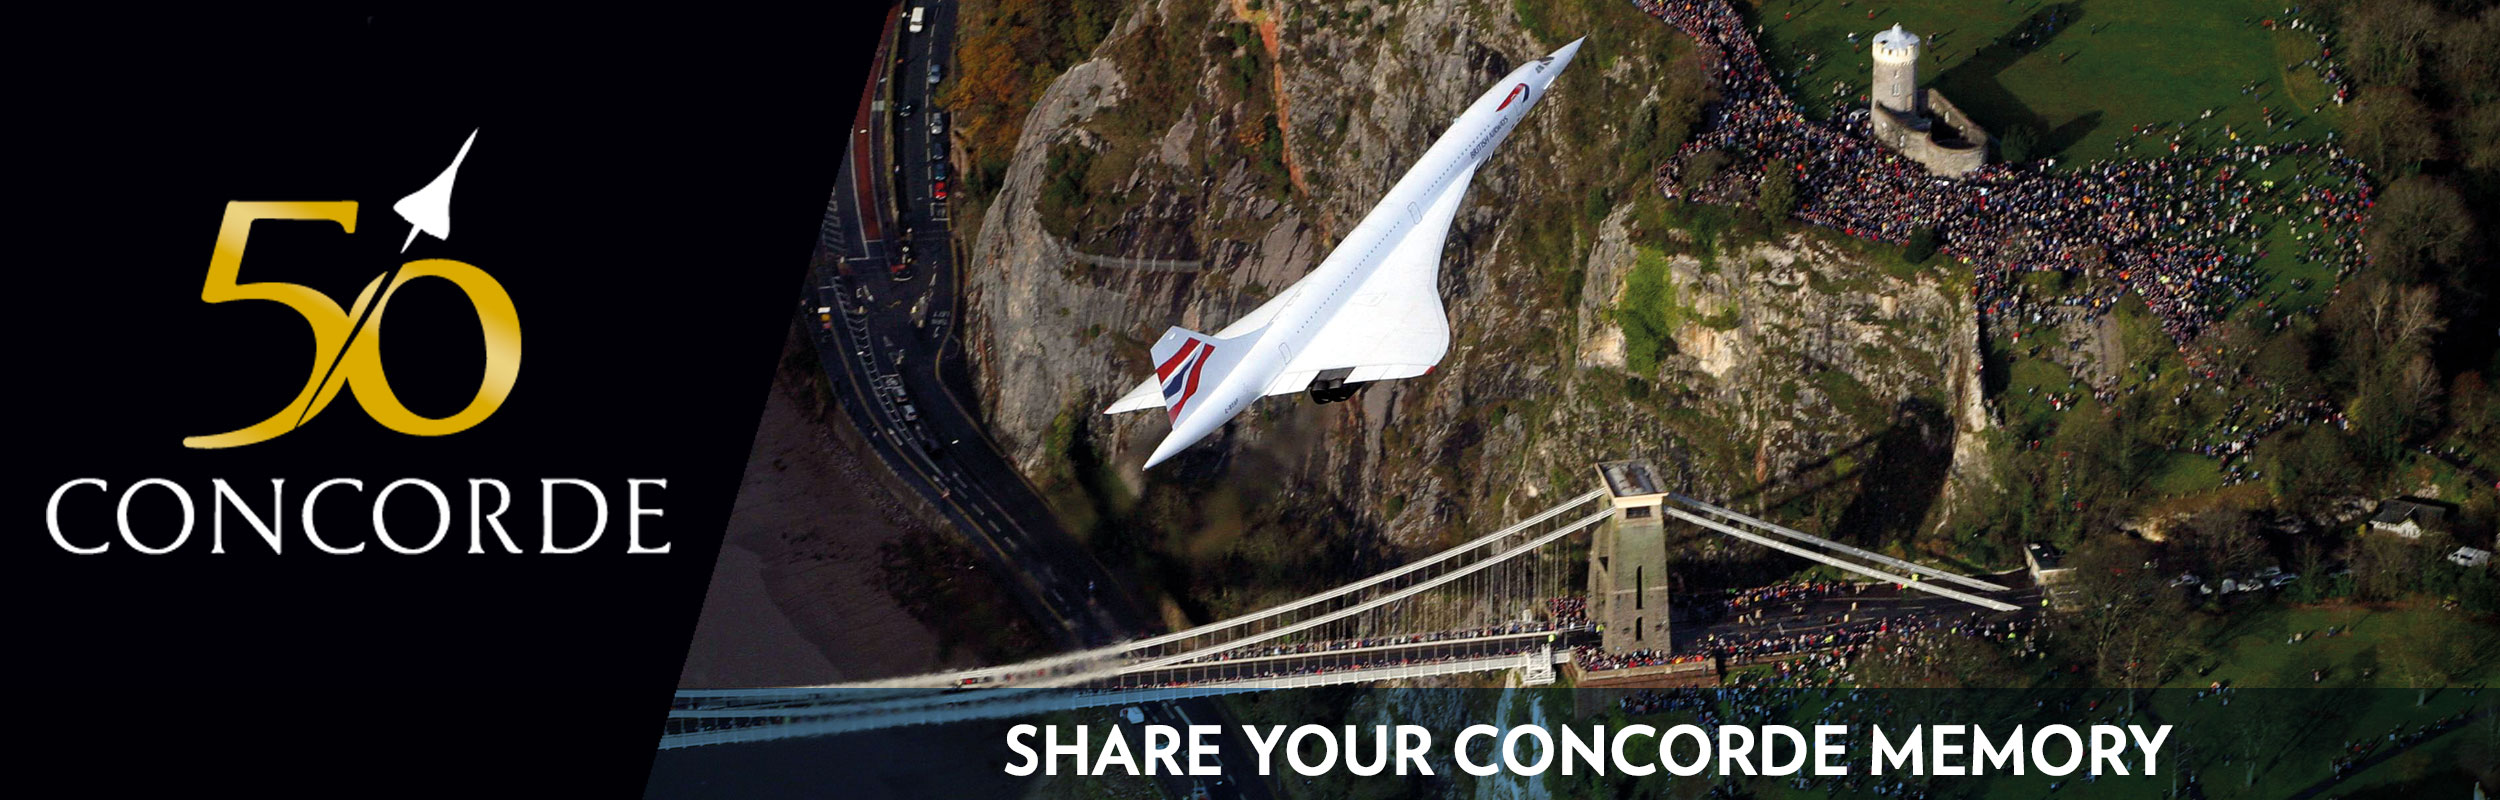 C50-Concorde-memory.jpg